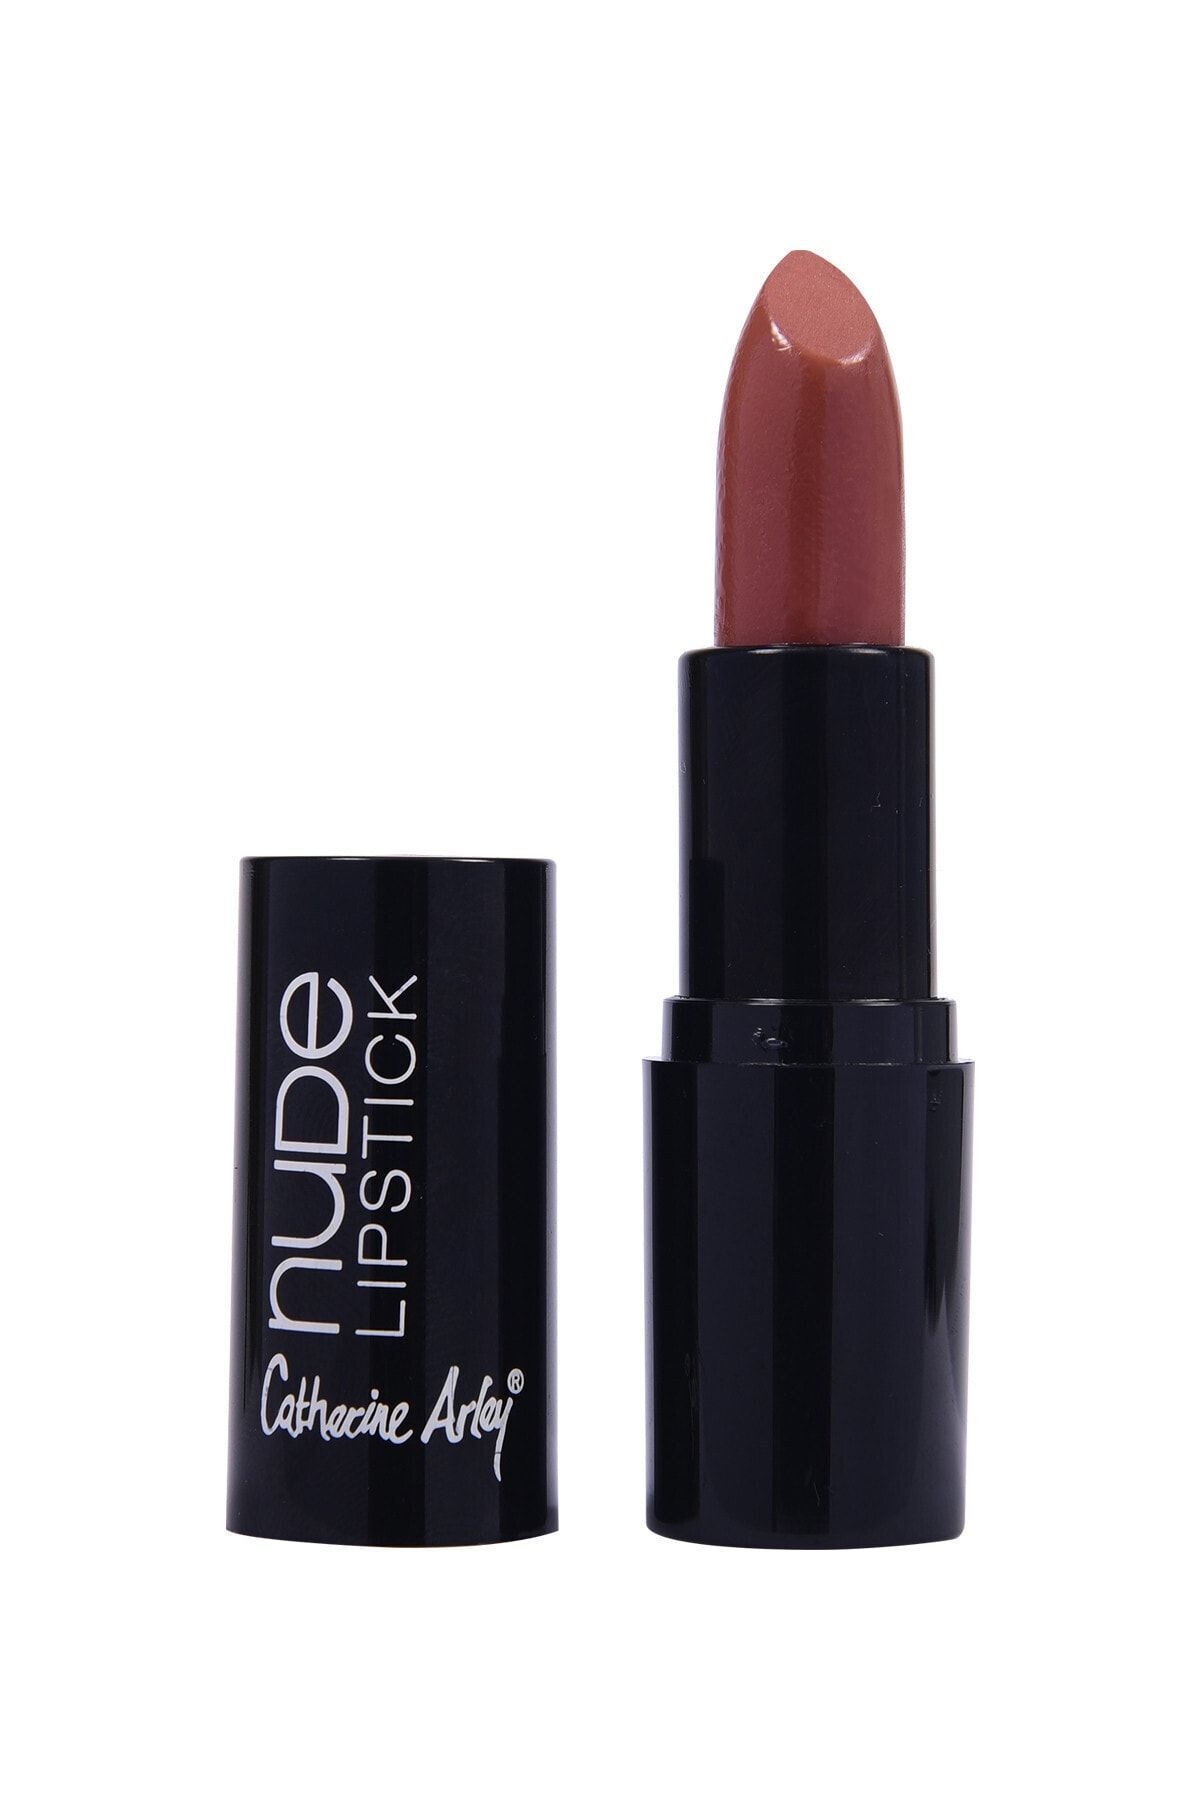 Catherine Arley Nude Lipstick (Nude Ruj) - N02 -